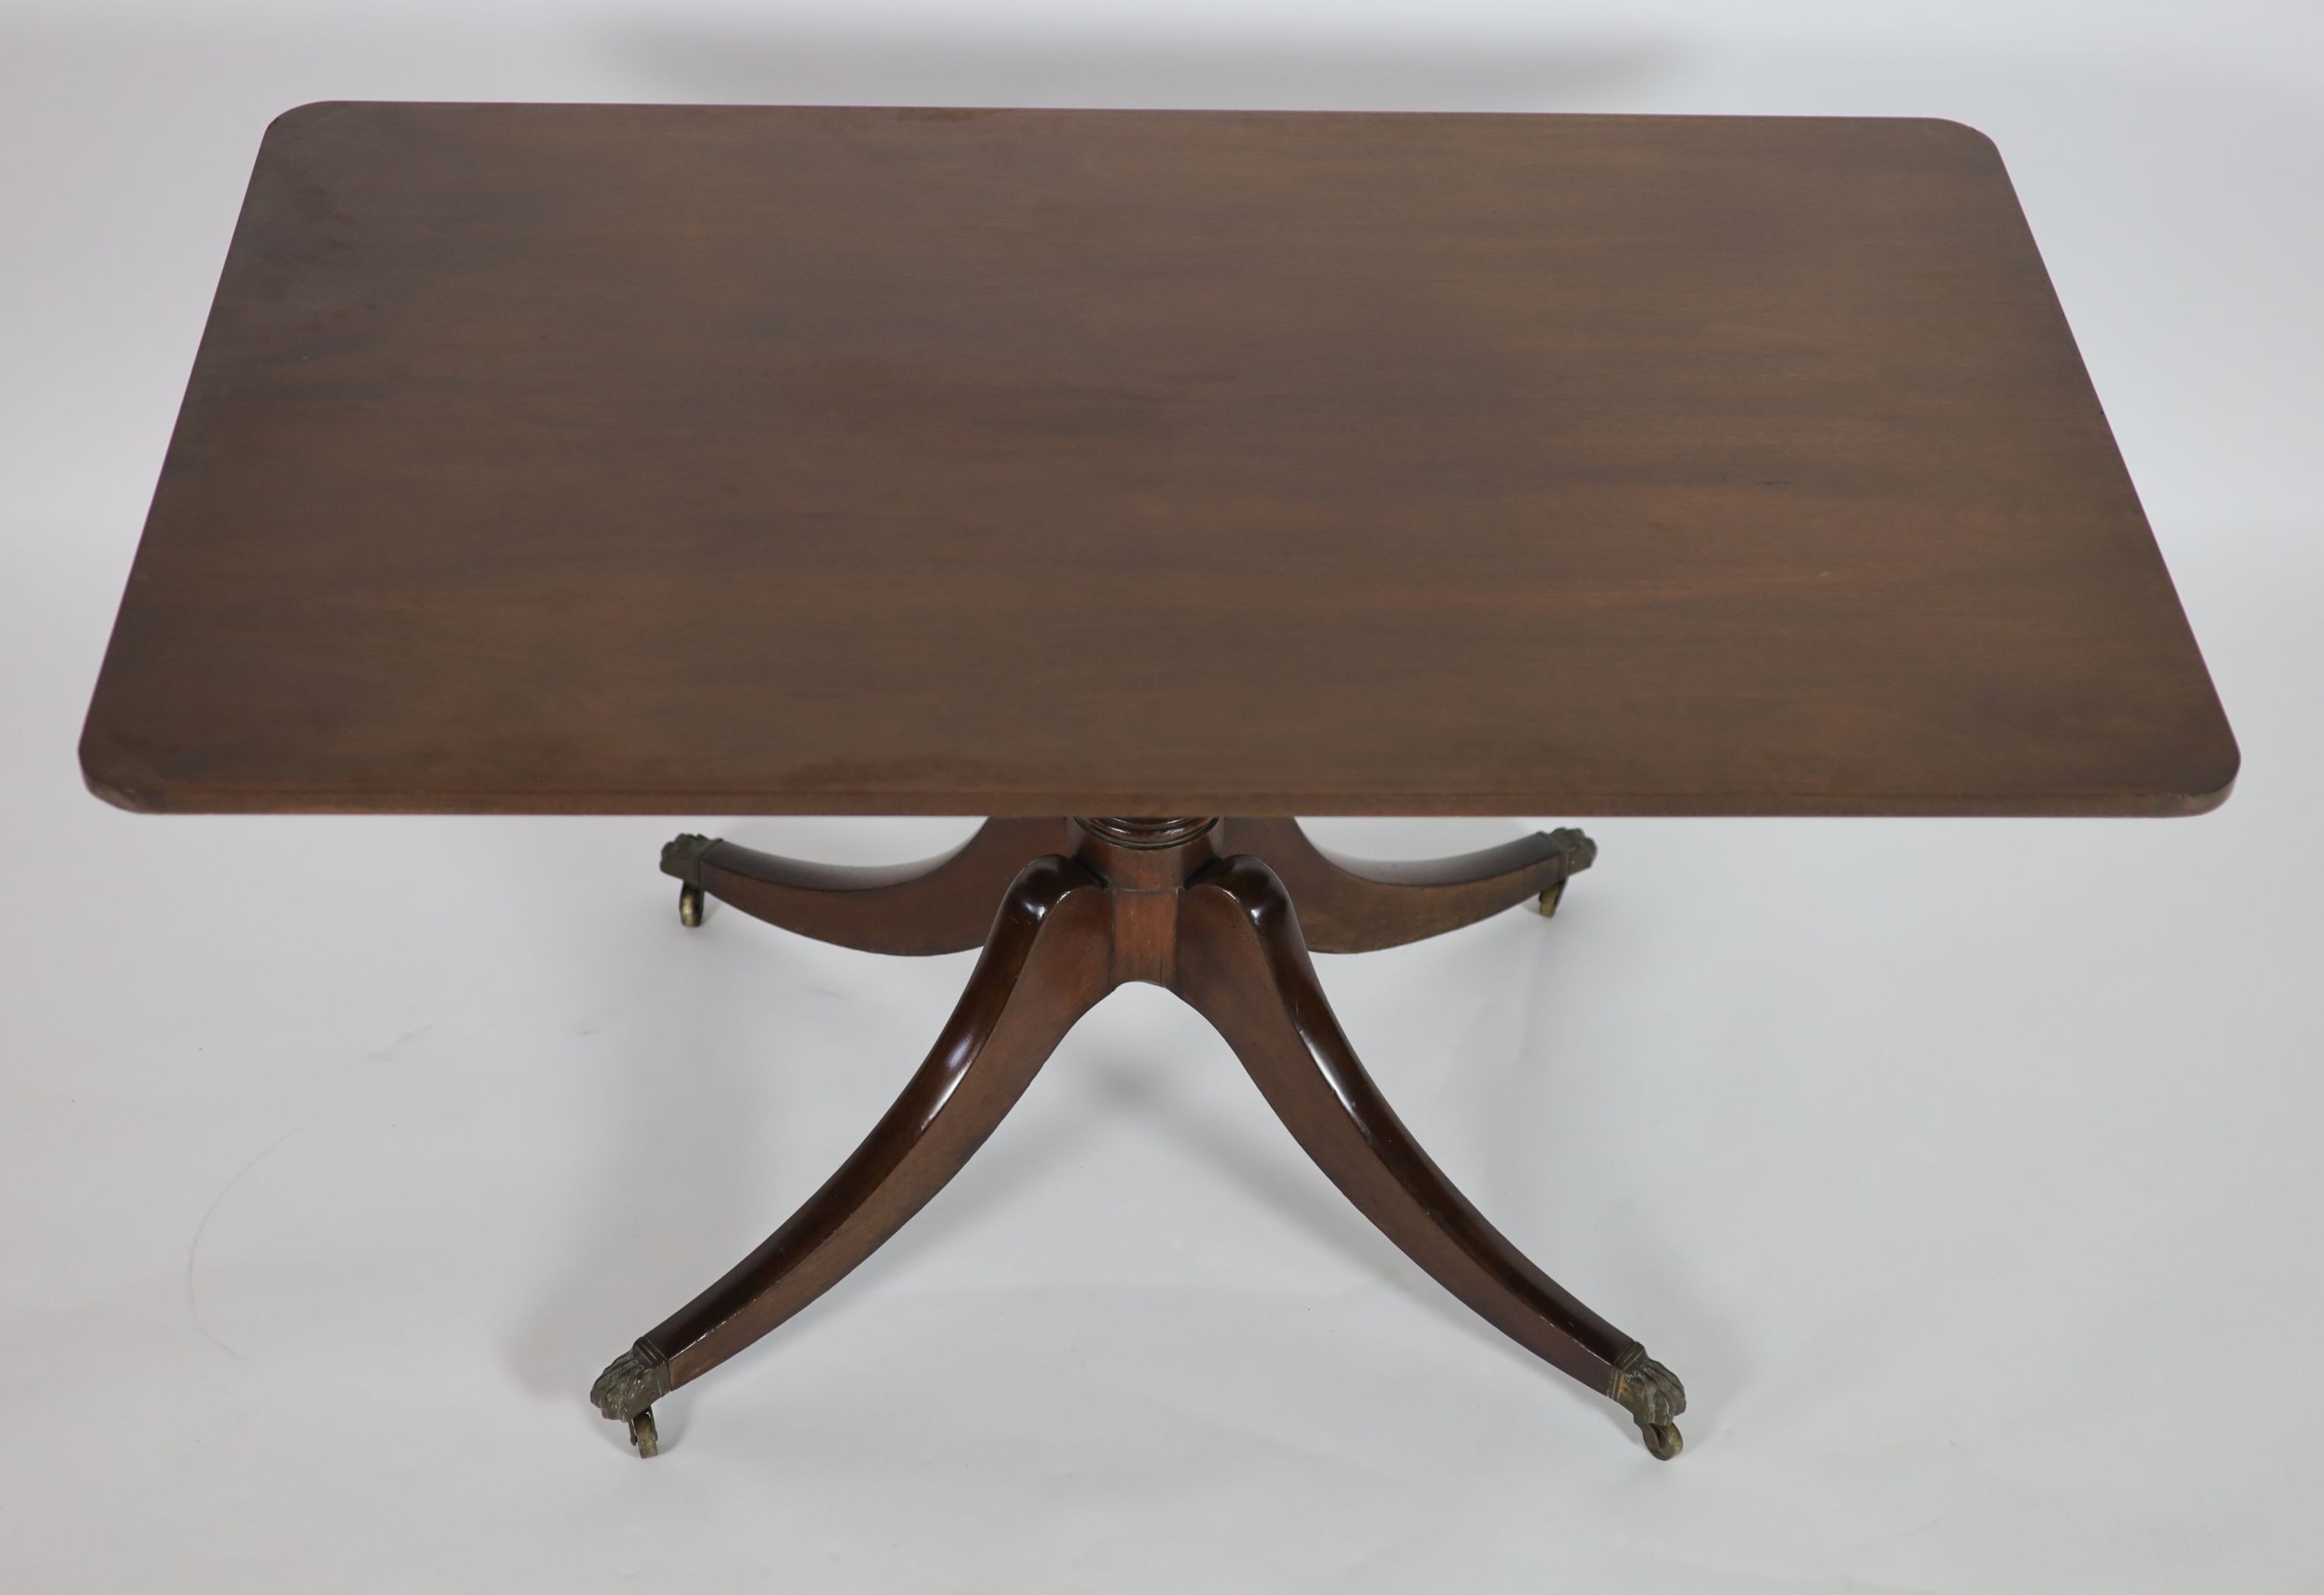 A Regency rectangular mahogany tilt top dining table, width 130cm, depth 80cm, height 72cm